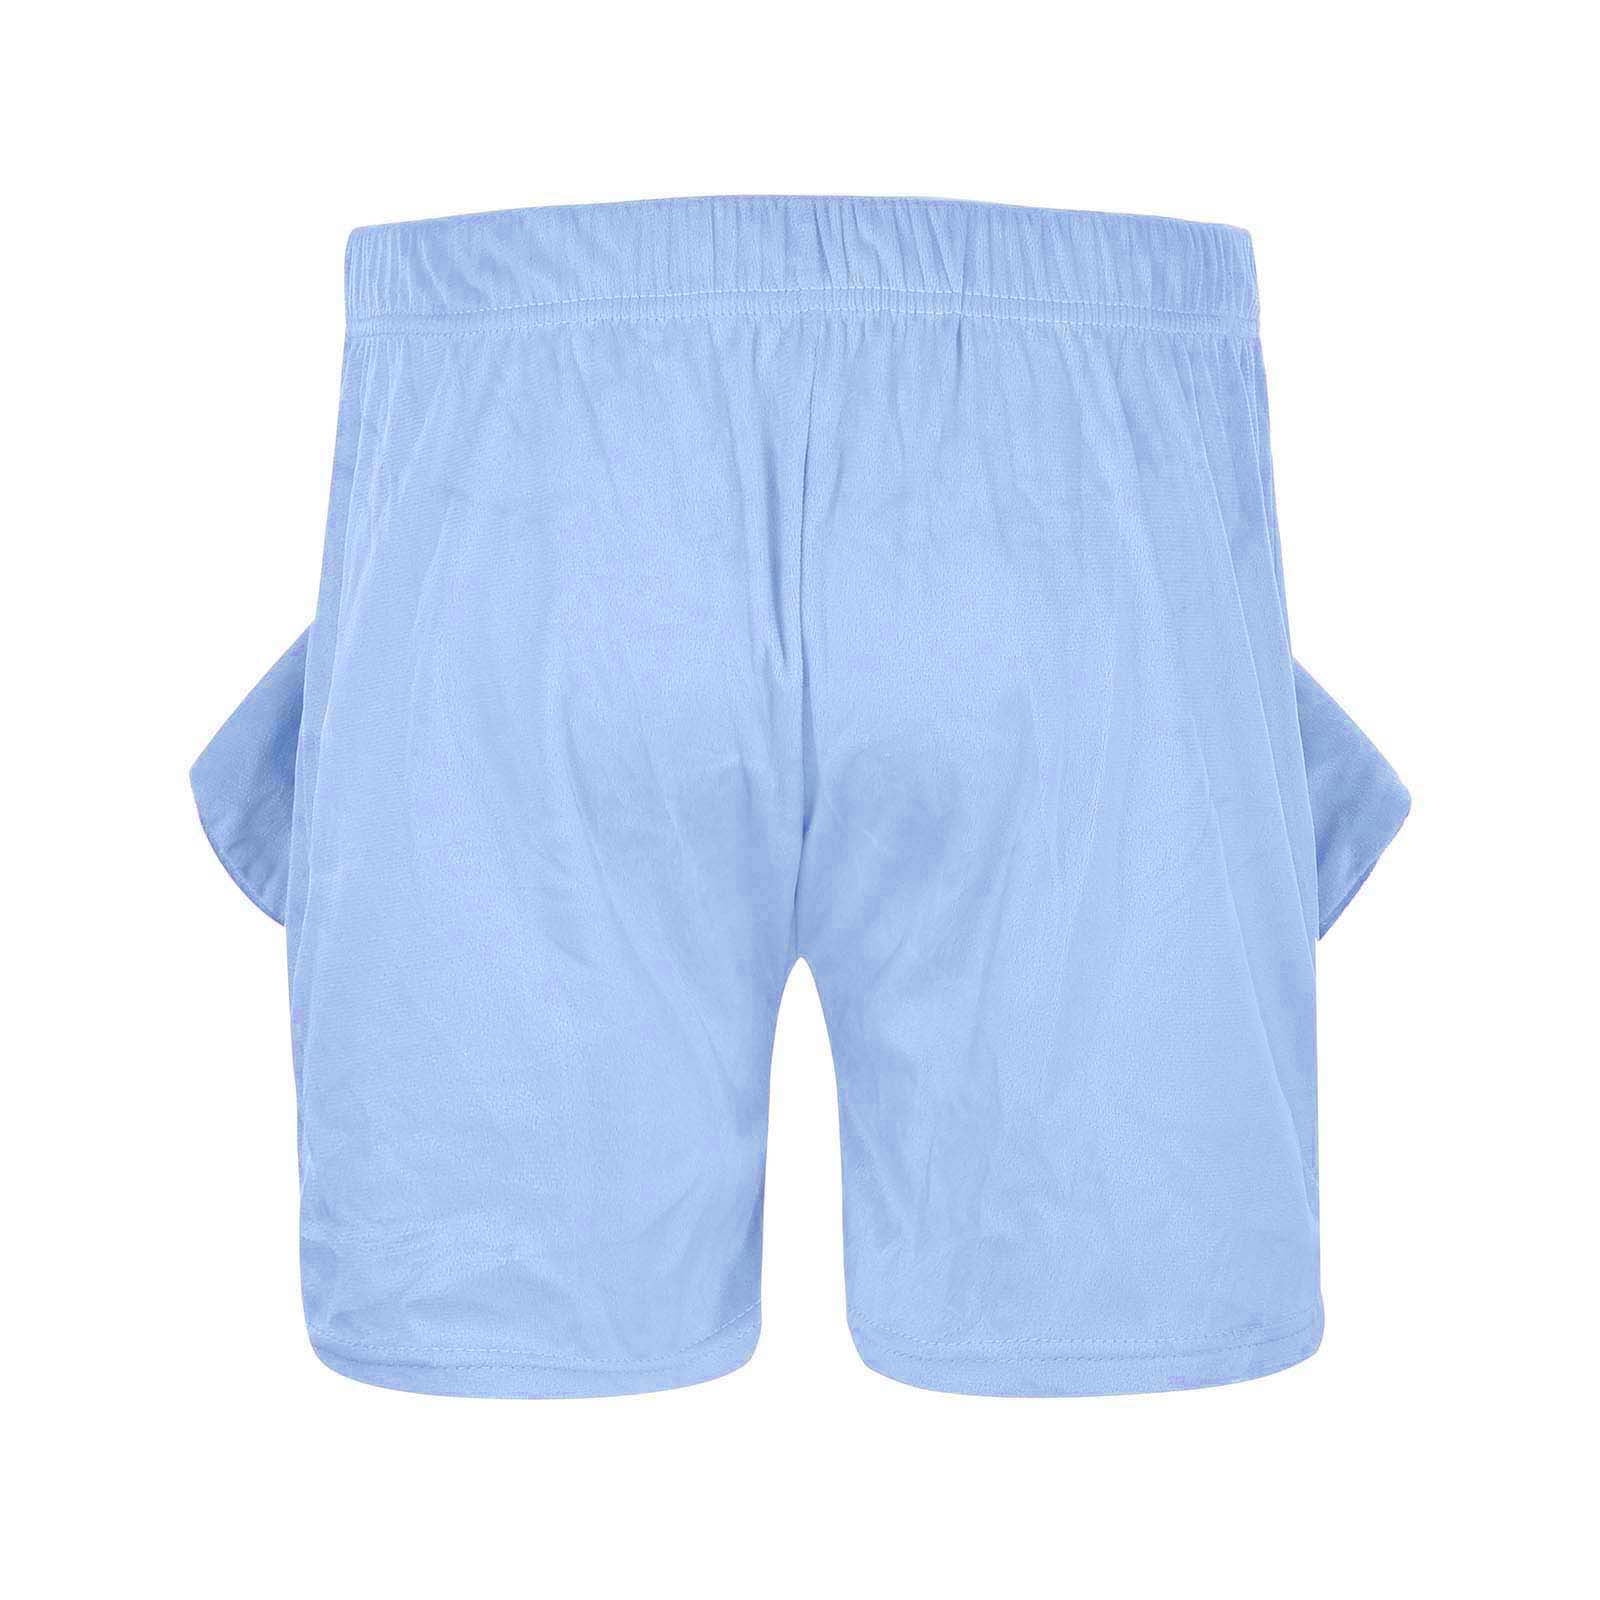 Men Elephant Boxer Shorts Fun Novelty Humorous Shorts Underwear